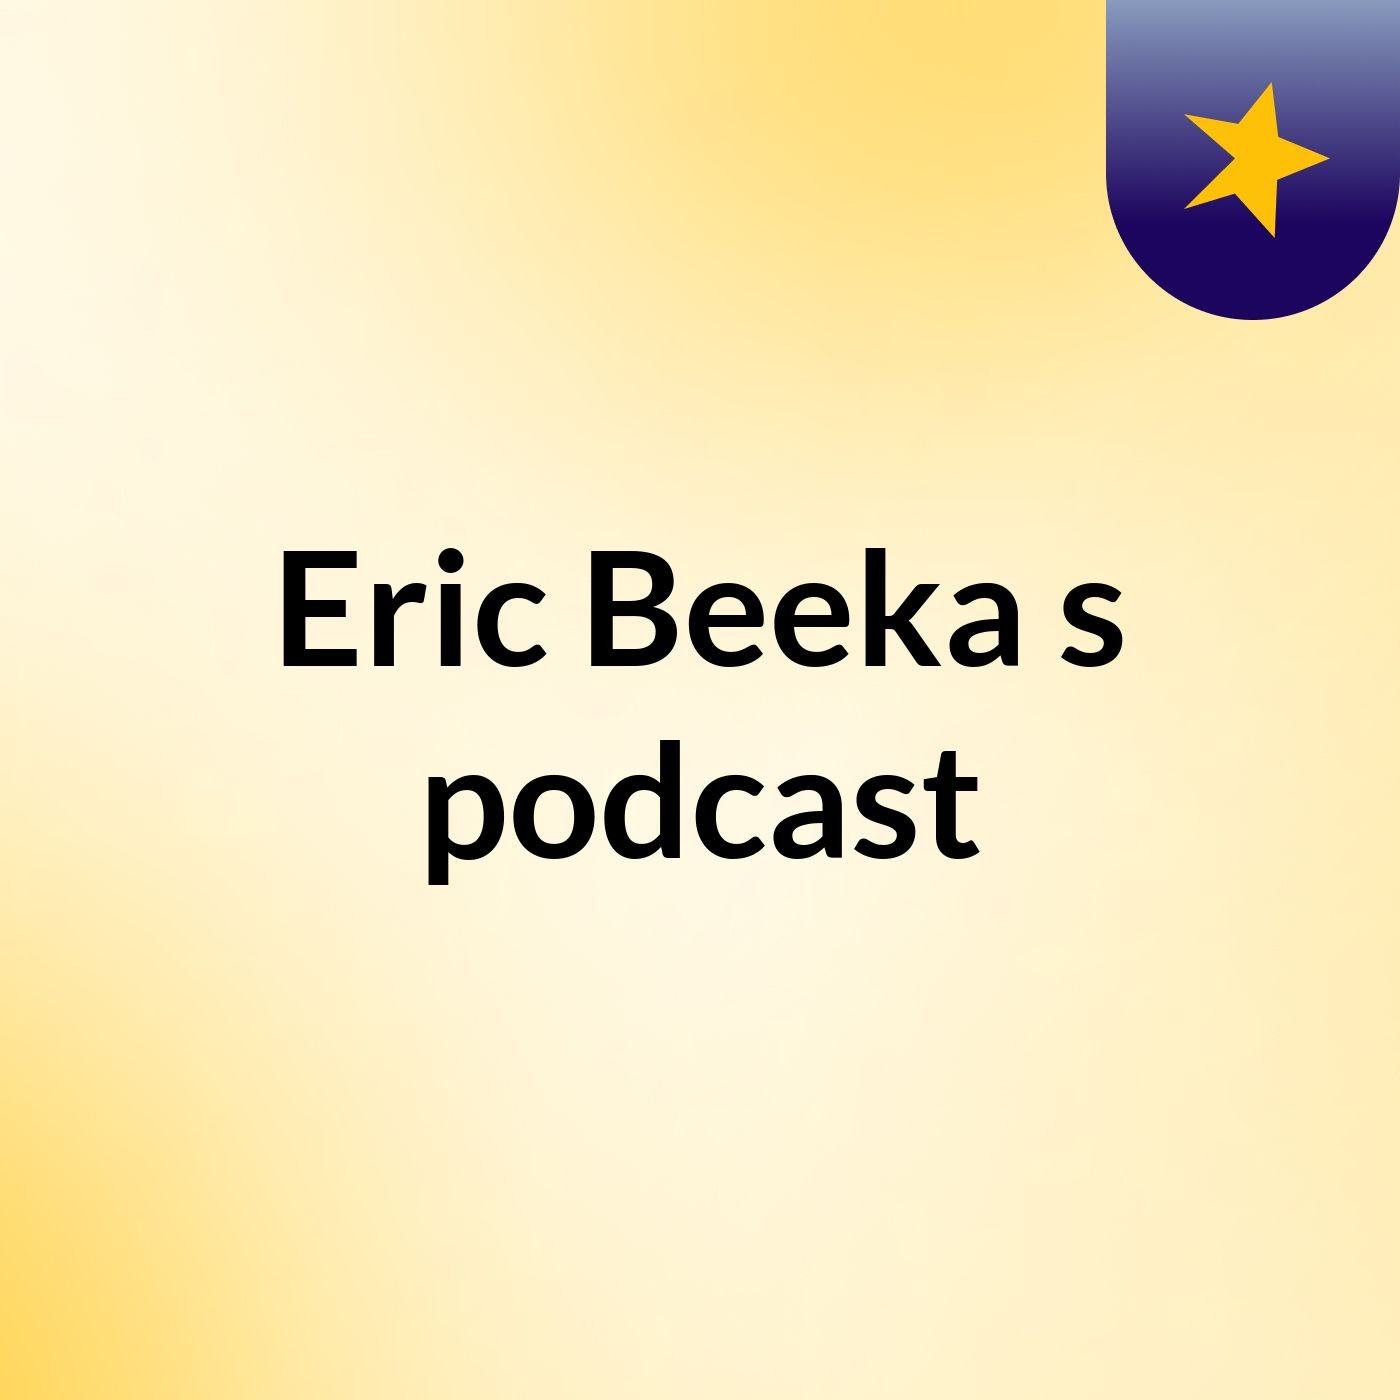 Eric Beeka's podcast